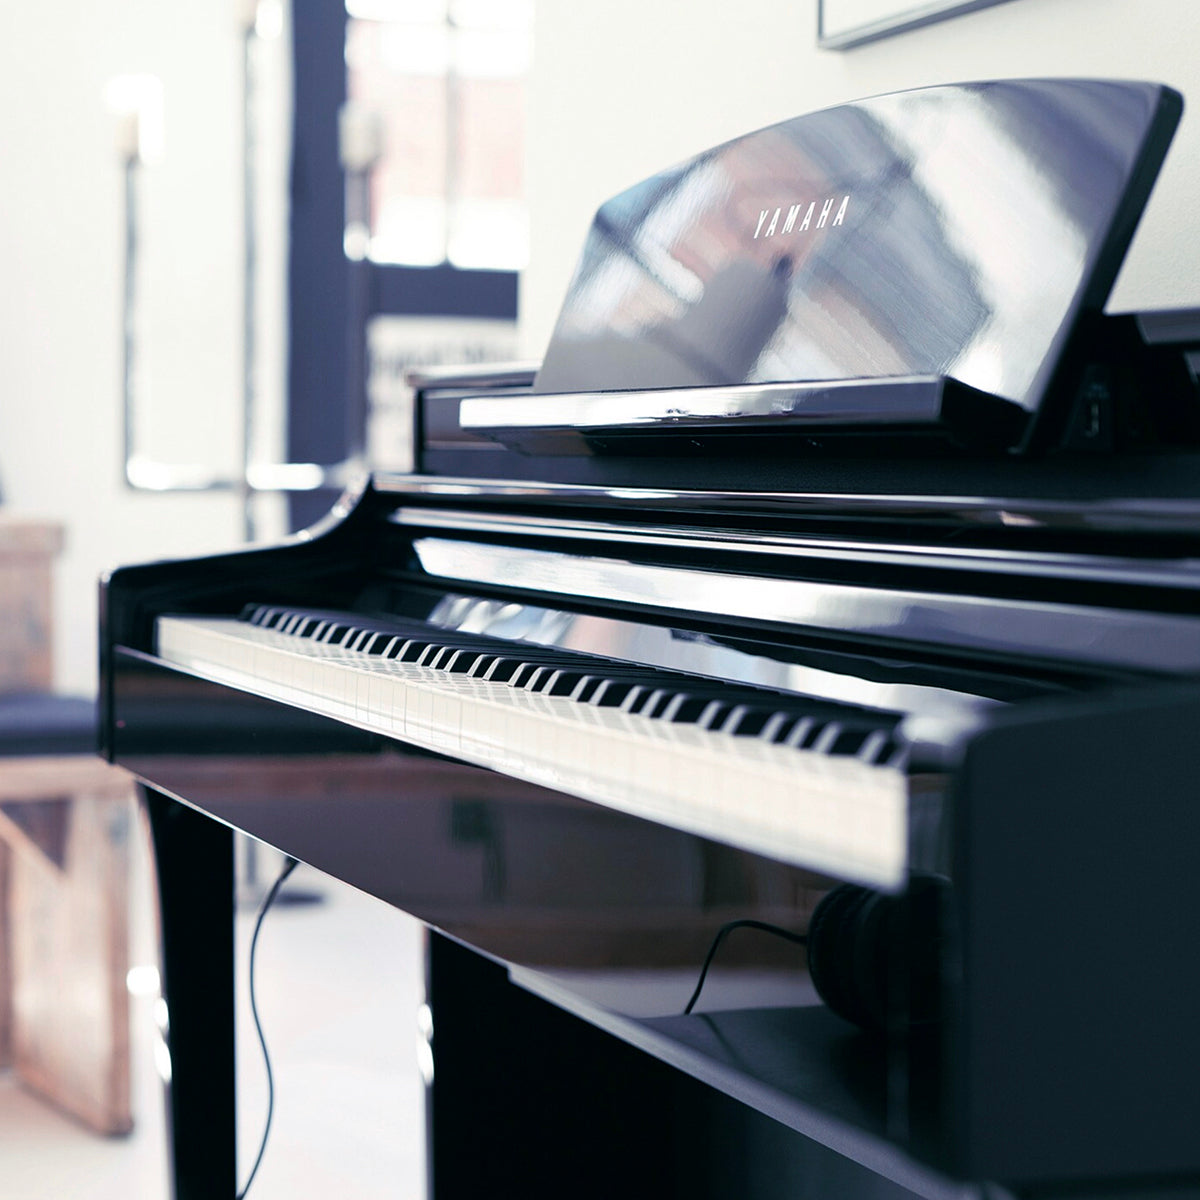 Yamaha Clavinova CSP-170 Digital Piano - Polished Ebony – Kraft Music